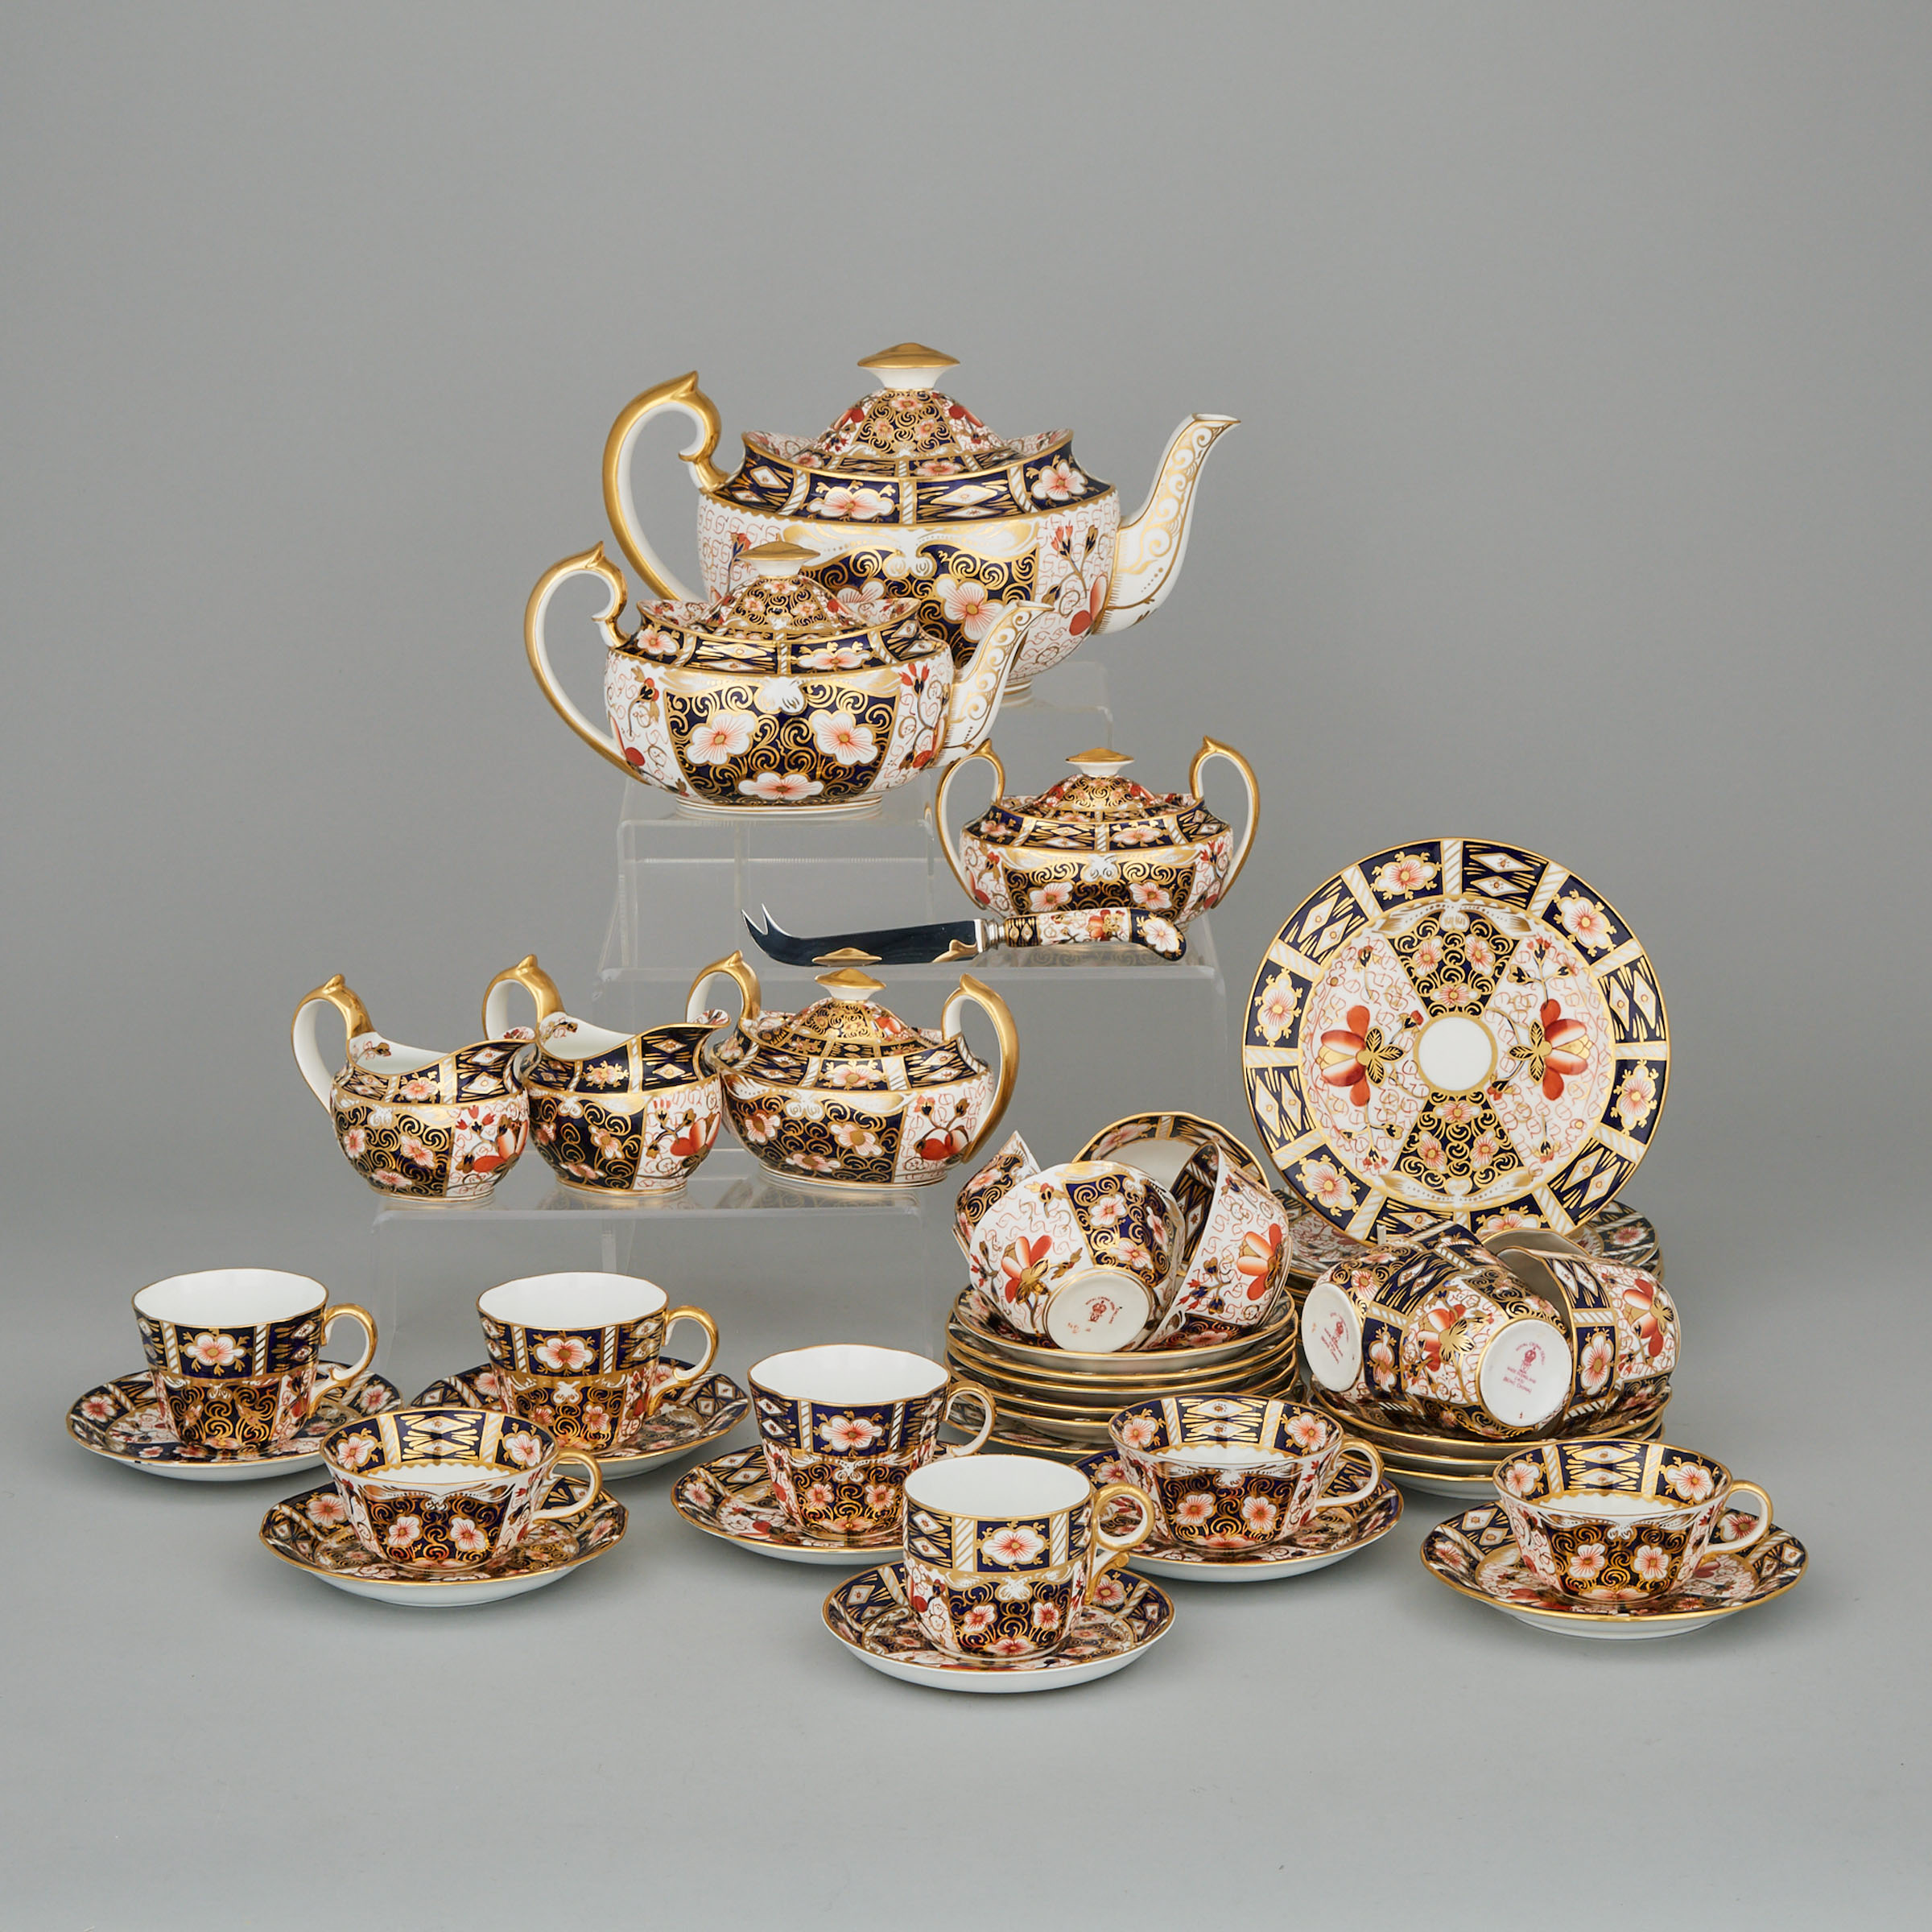 Royal Crown Derby 'Imari' (2451) Pattern Tea Service, 20th century